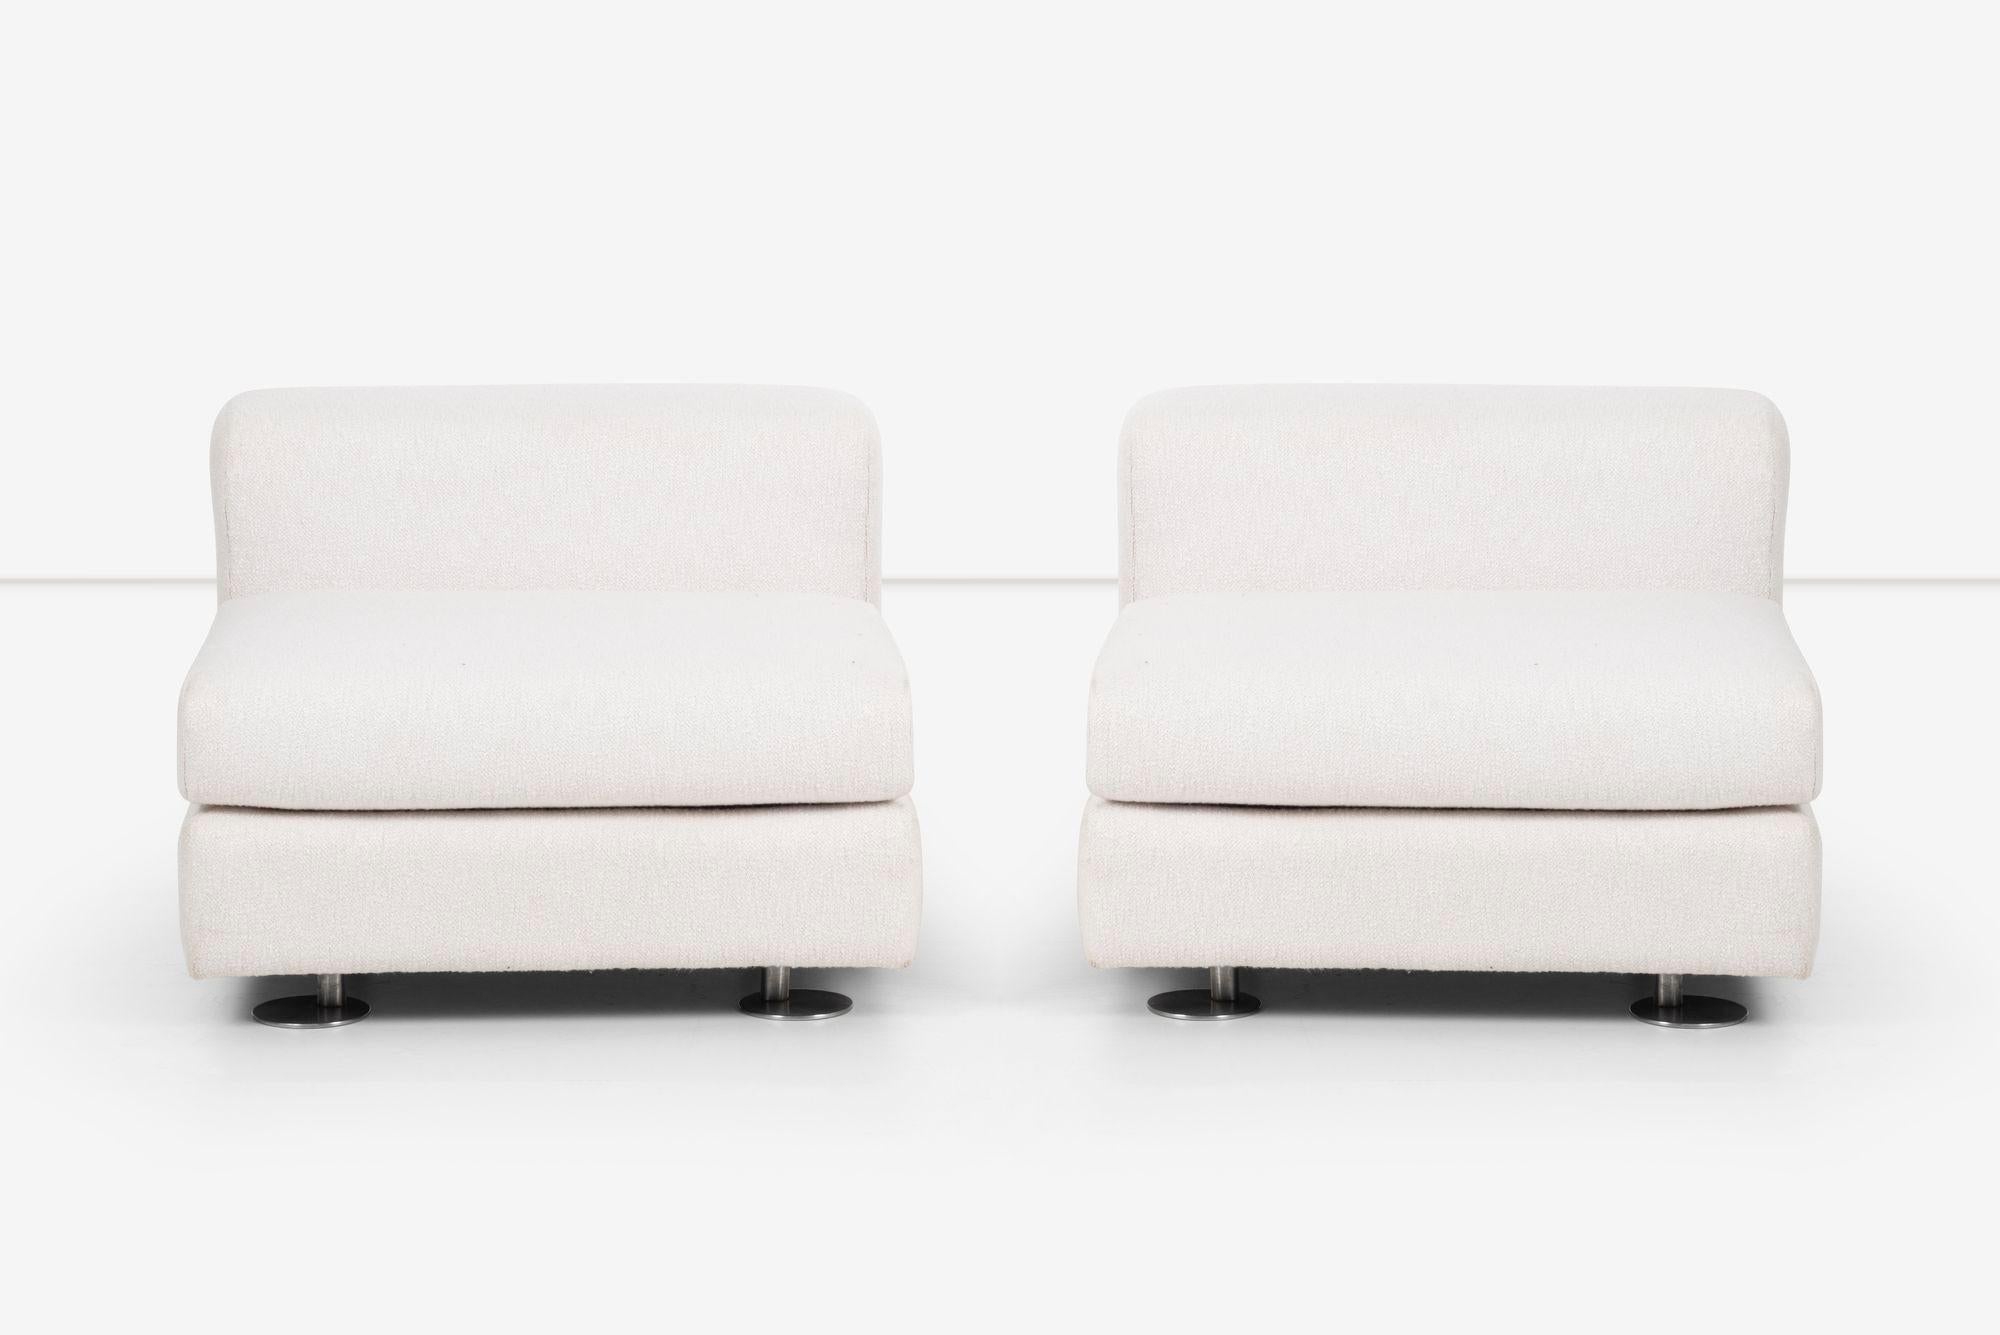 Paar Osvaldo Borsani Lounge Chairs hergestellt von Tecno 1966 Verchromte runde Tellerfüße, neu gepolstert mit italienischem Boucle.
Borsani im Auftrag von Joseph James Akston, La Rotunda House Palm Beach, Florida
Sitzhöhe 16 Zoll.